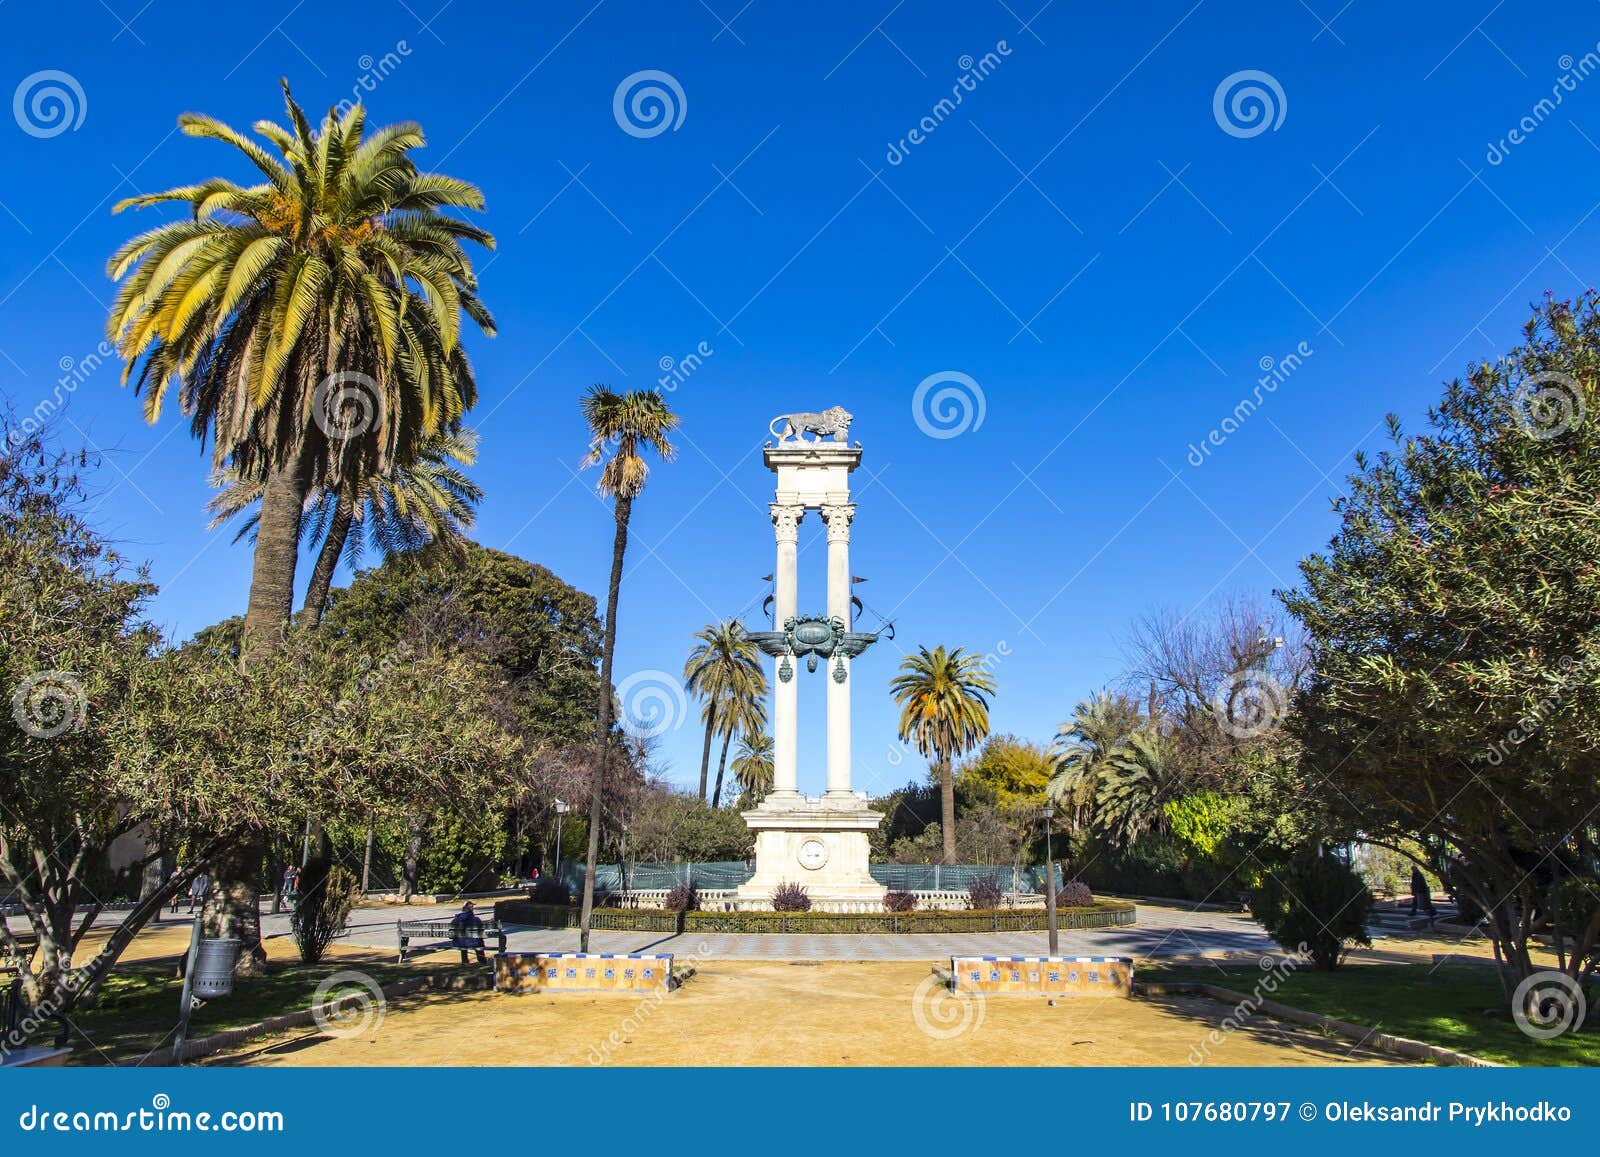 columbus monument in jardines de murillo, seville, spain